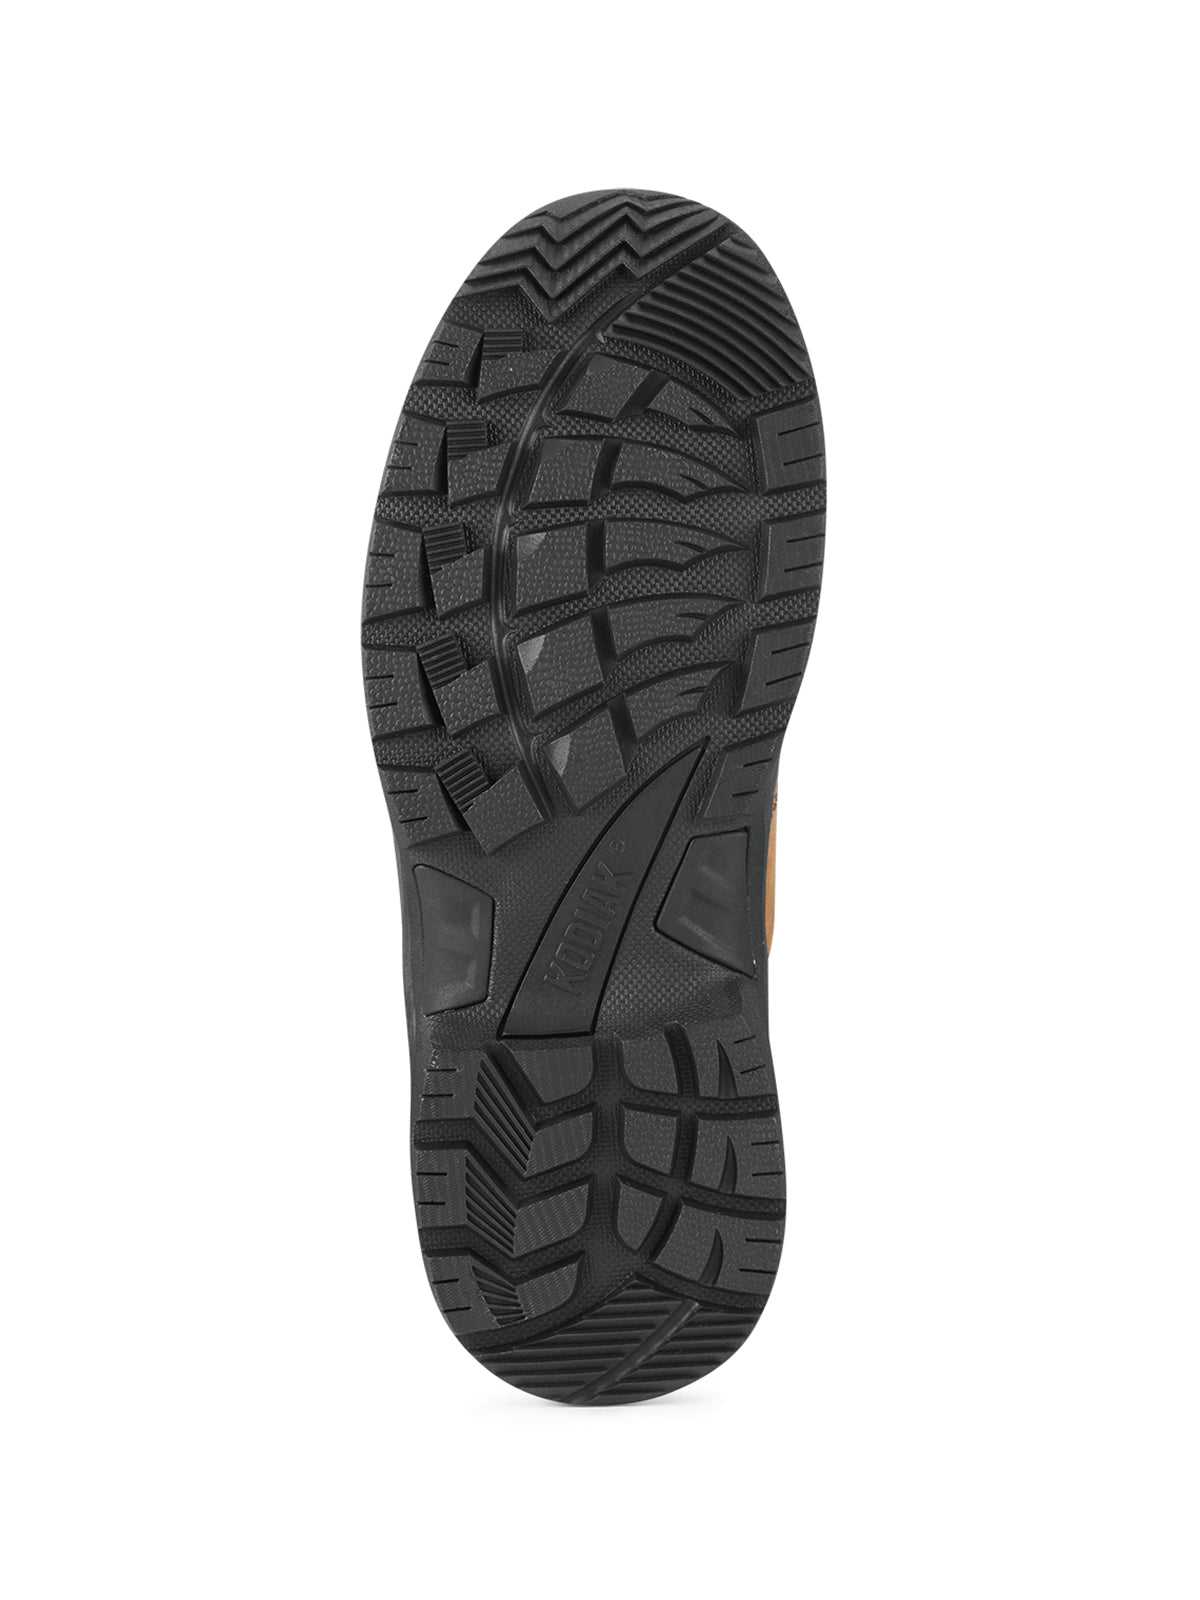 Waterproof Composite Toe Hiker Safety Work Boot